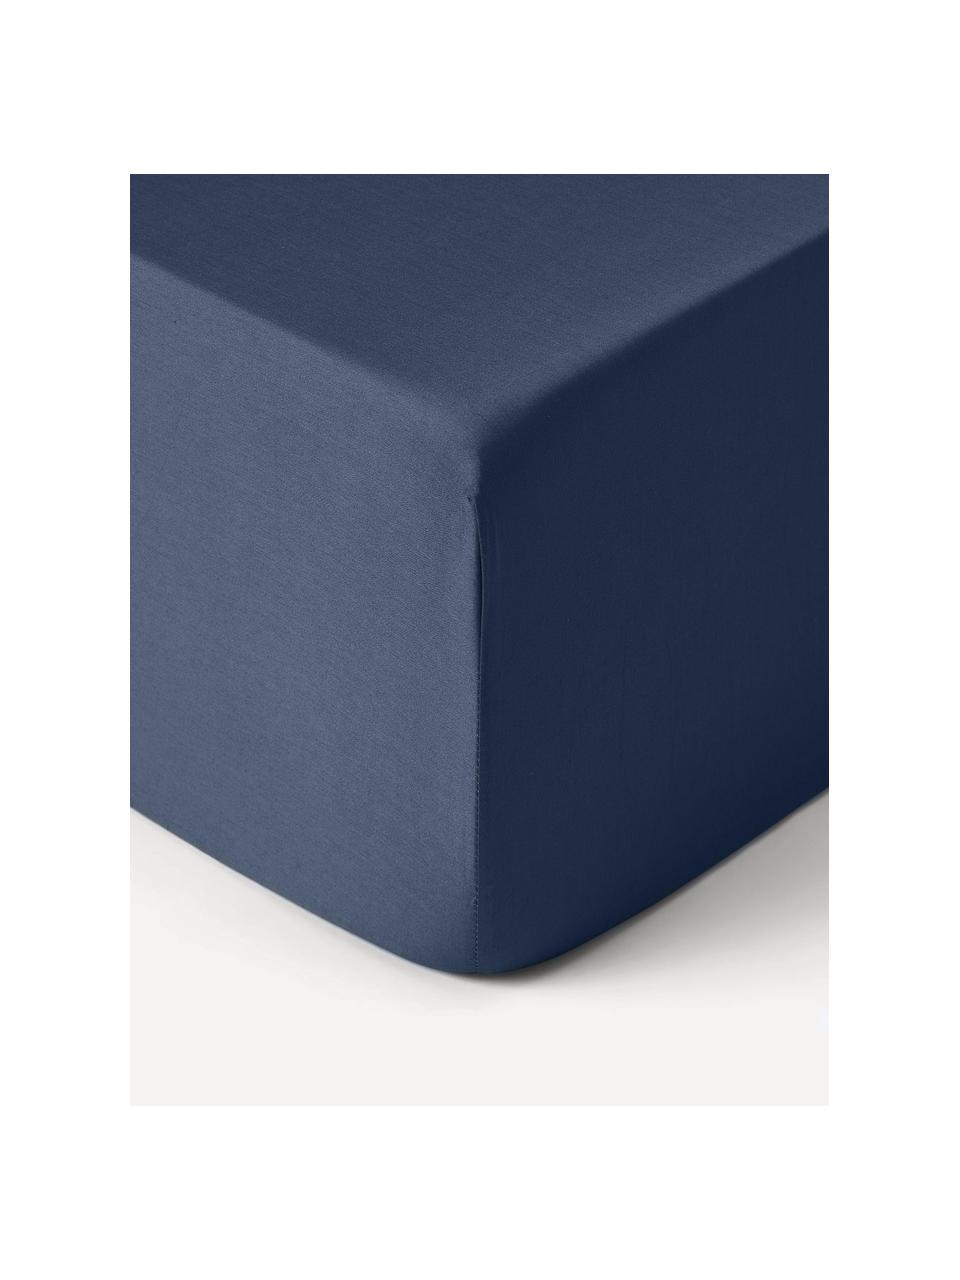 Sábana bajera de satén Comfort, Azul oscuro, Cama 90 cm (90 x 200 x 35 cm)